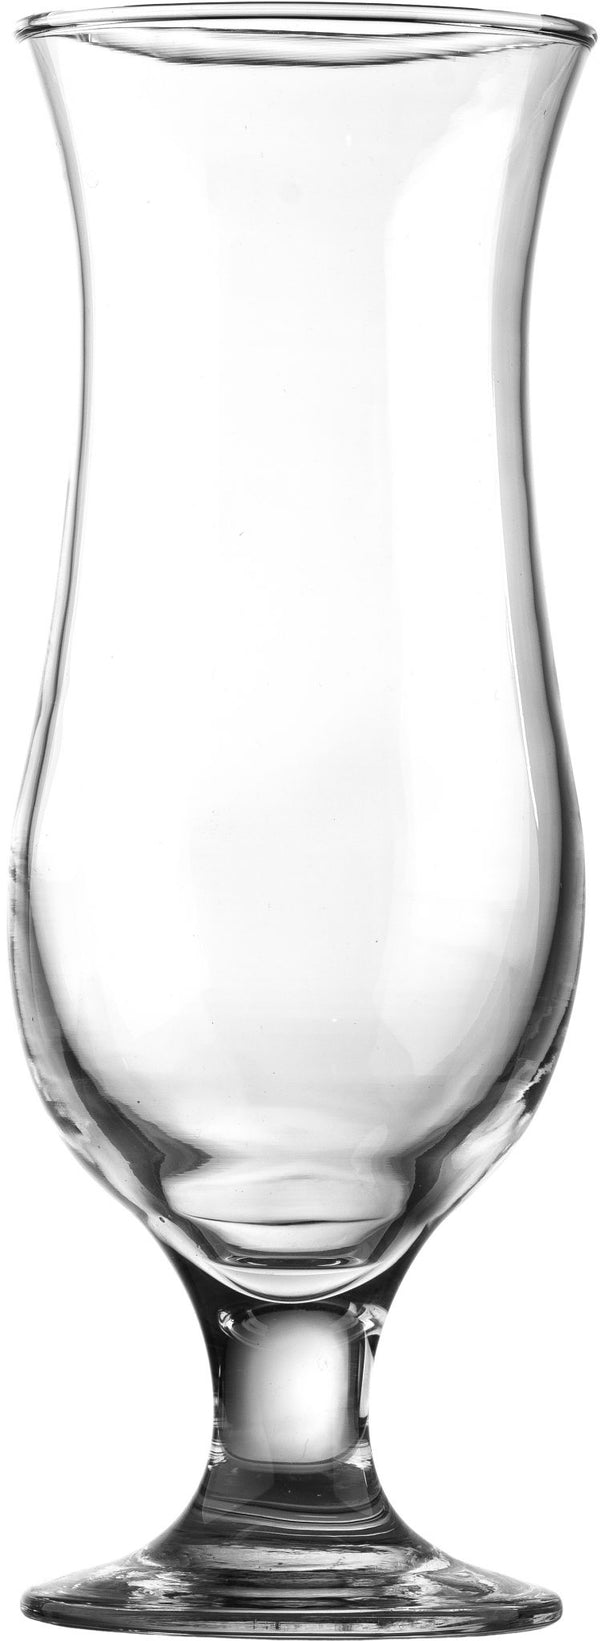 Metropolitan Ariadne Hurricane Cocktail Glasses 15Â½ oz Pack of 6